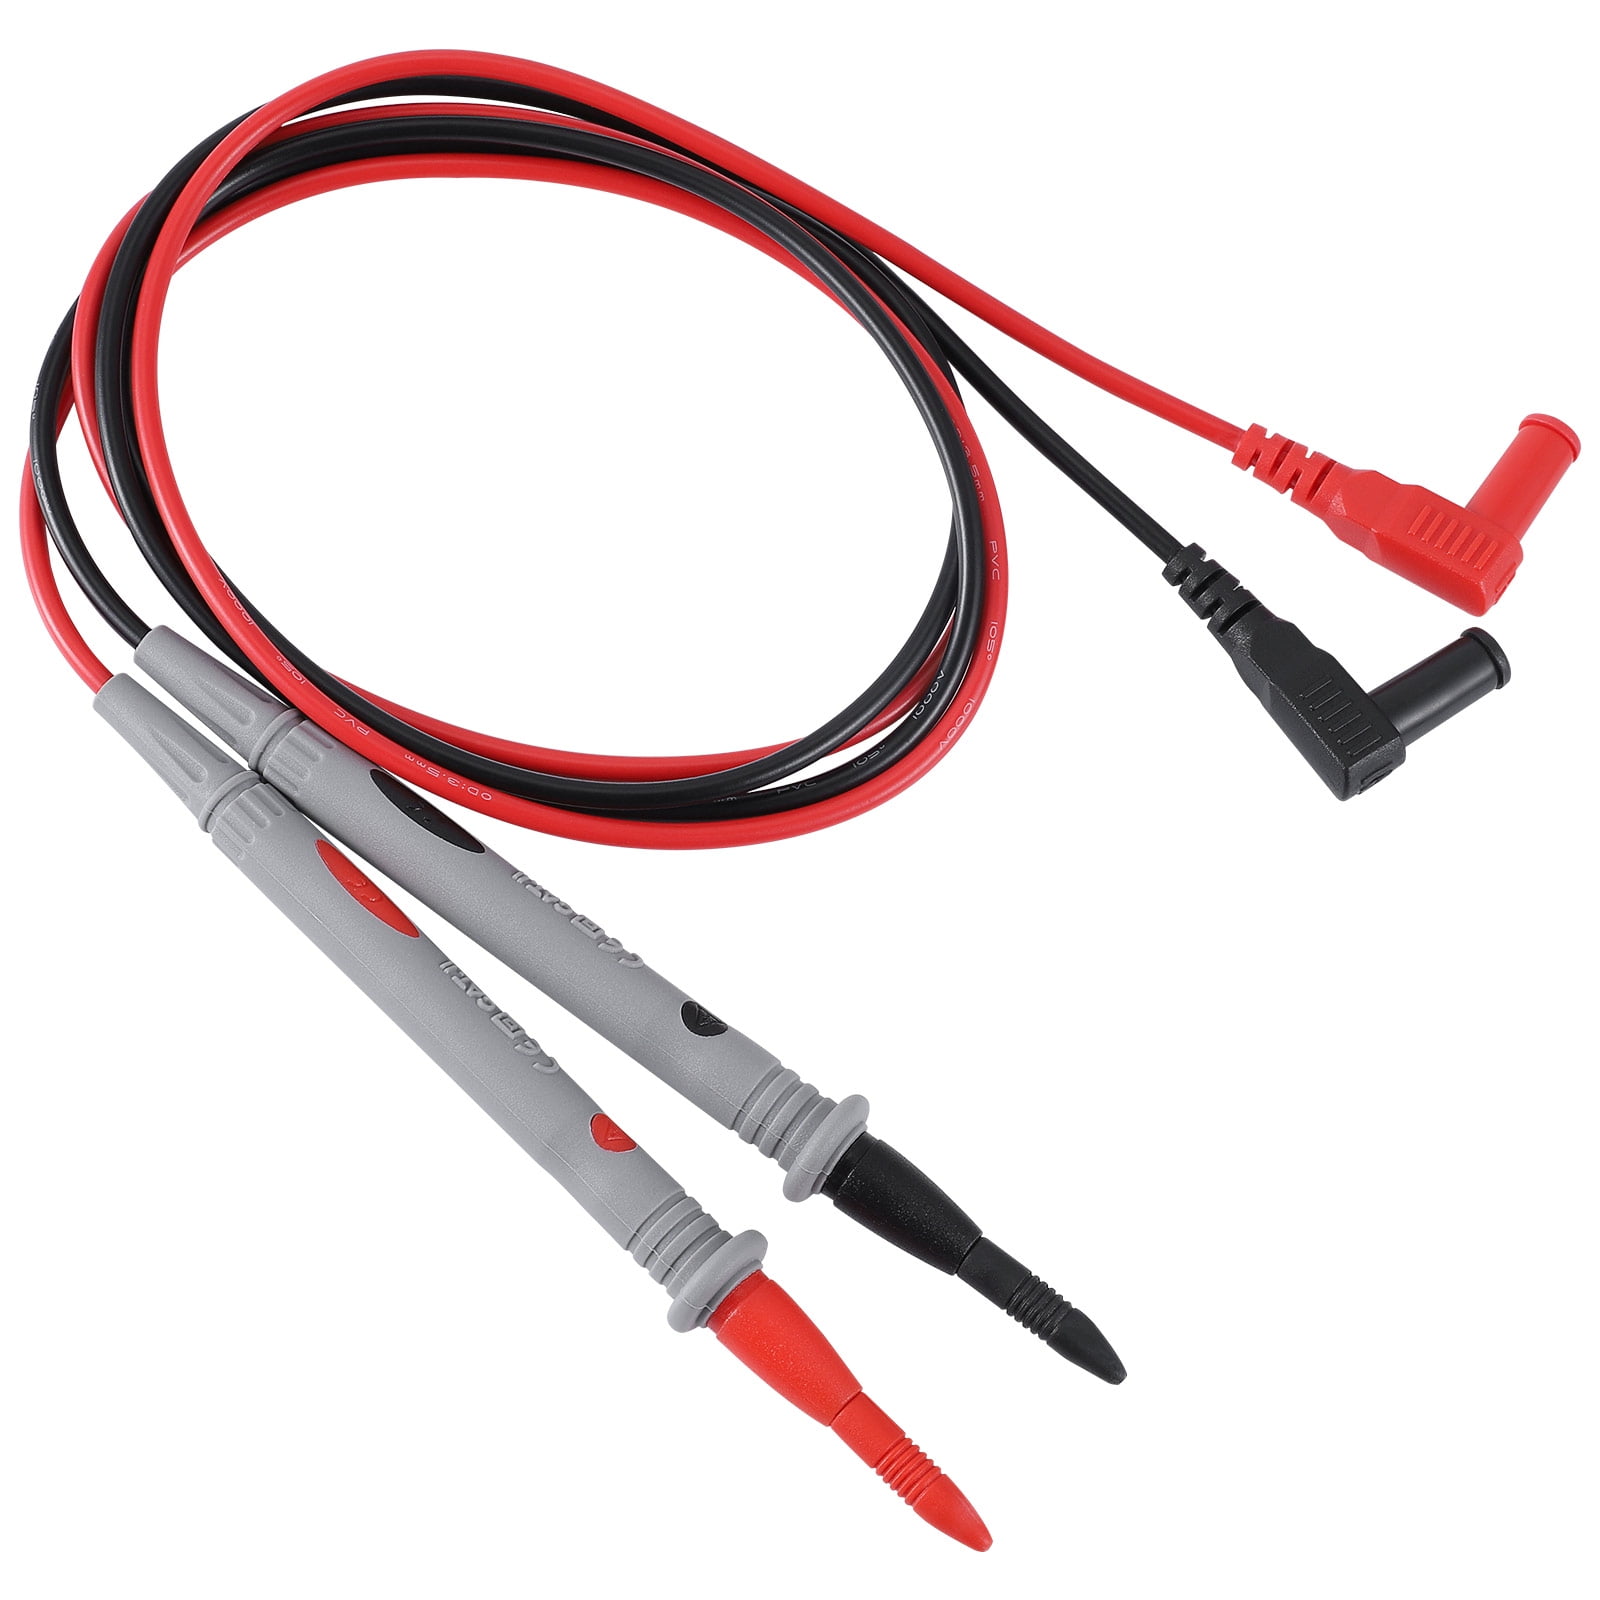 New Universal Digital Multimeter Multi Meter Test Lead Probe Wire Pen Cable 